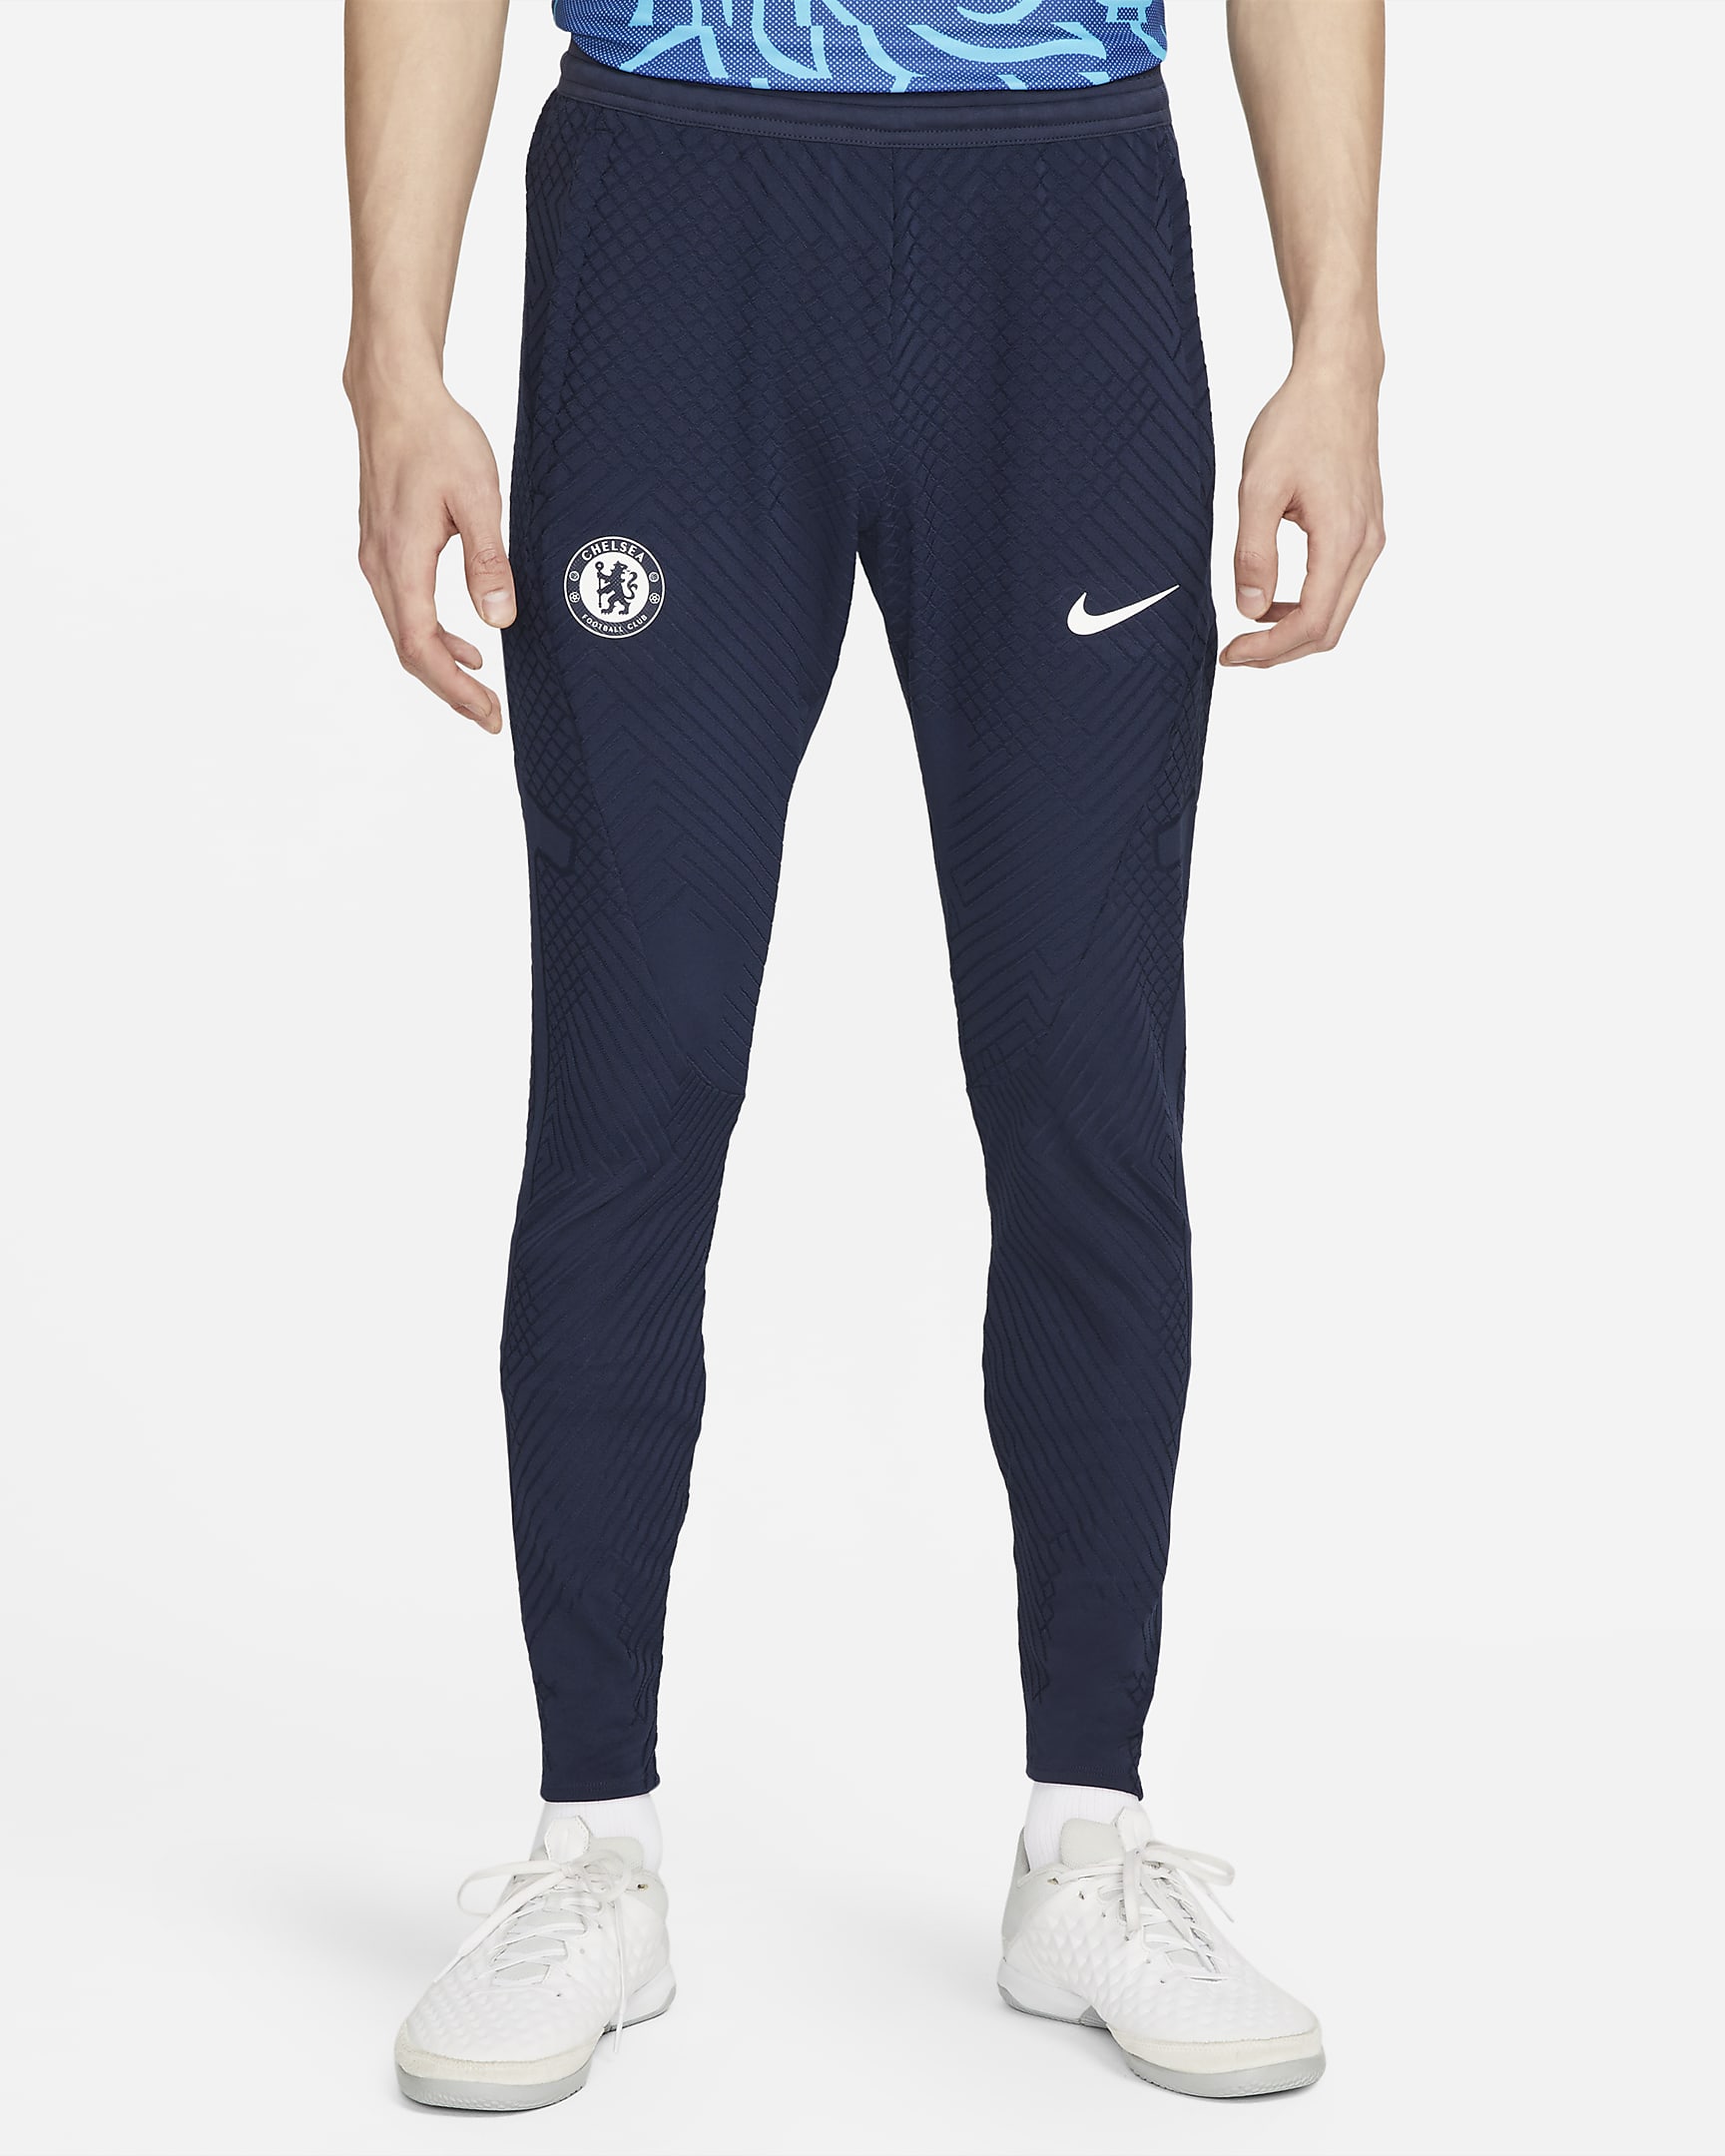 Chelsea F.C. Strike Elite Men's Nike Dri-FIT ADV Football Pants. Nike IL